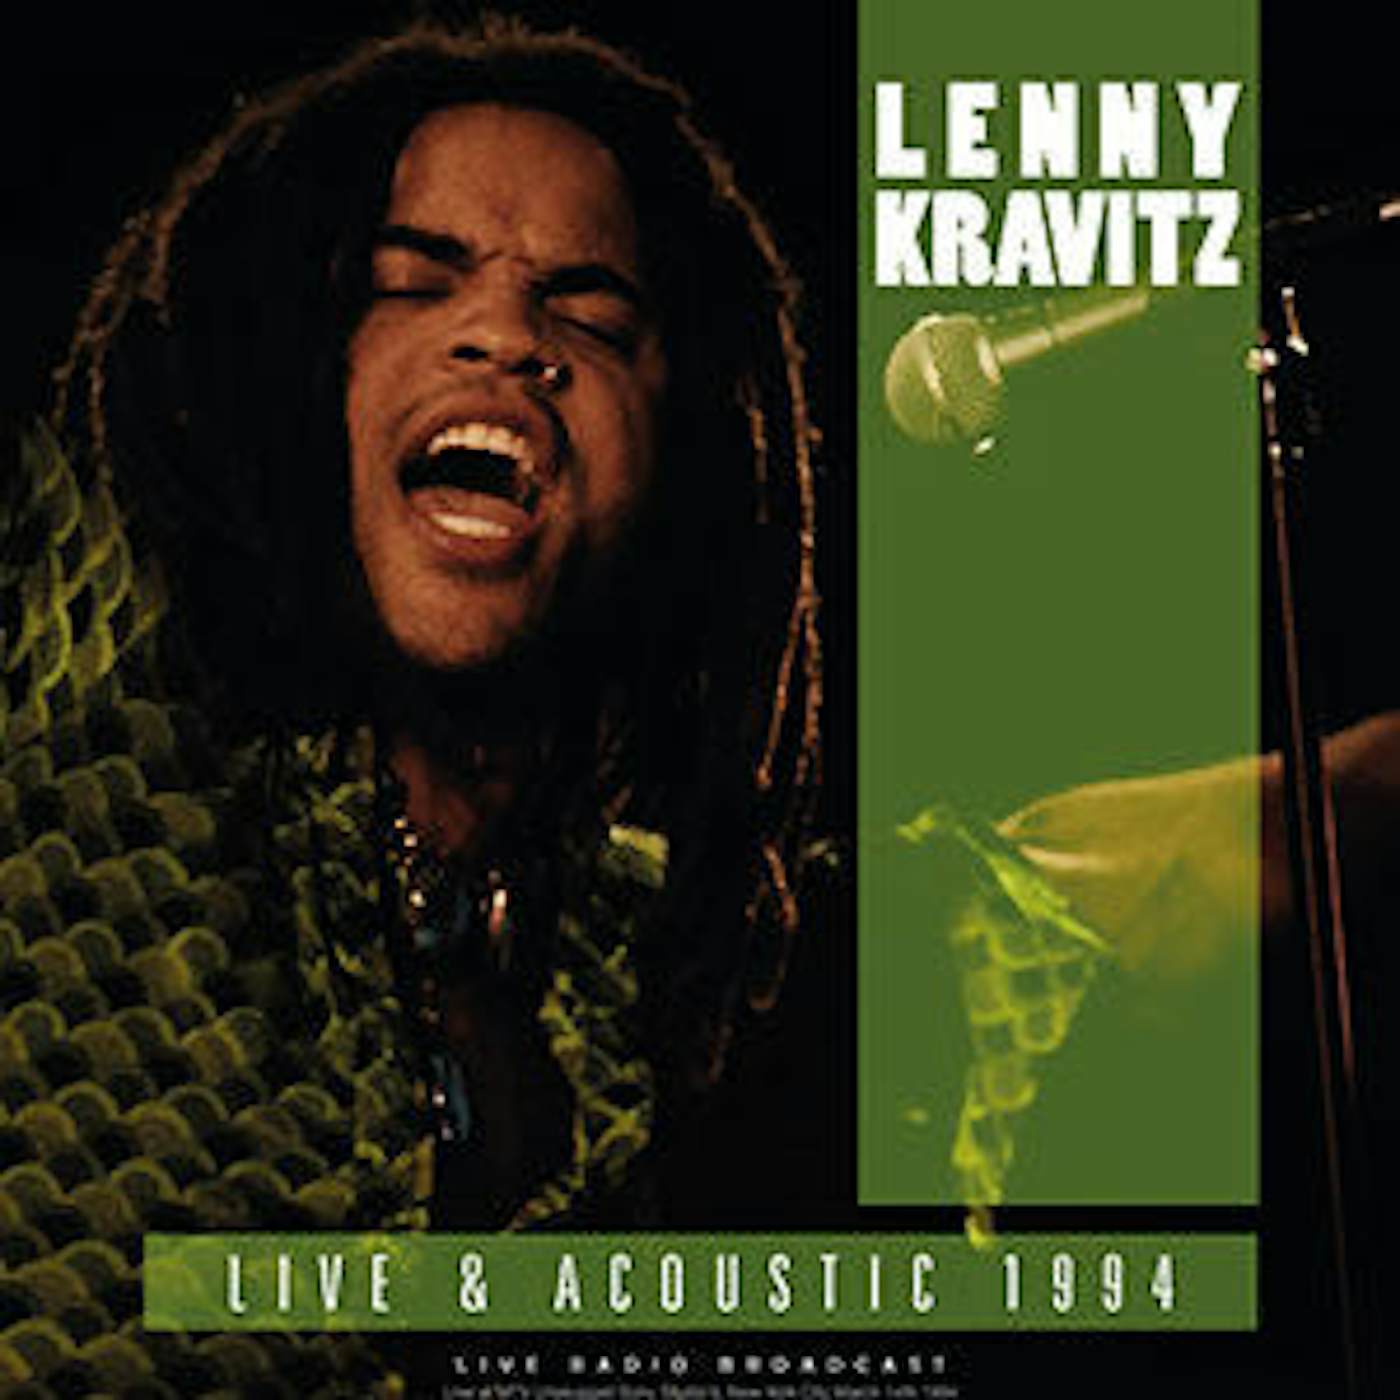 Lenny Kravitz LP Vinyl Record - Live & Acoustic 19 94